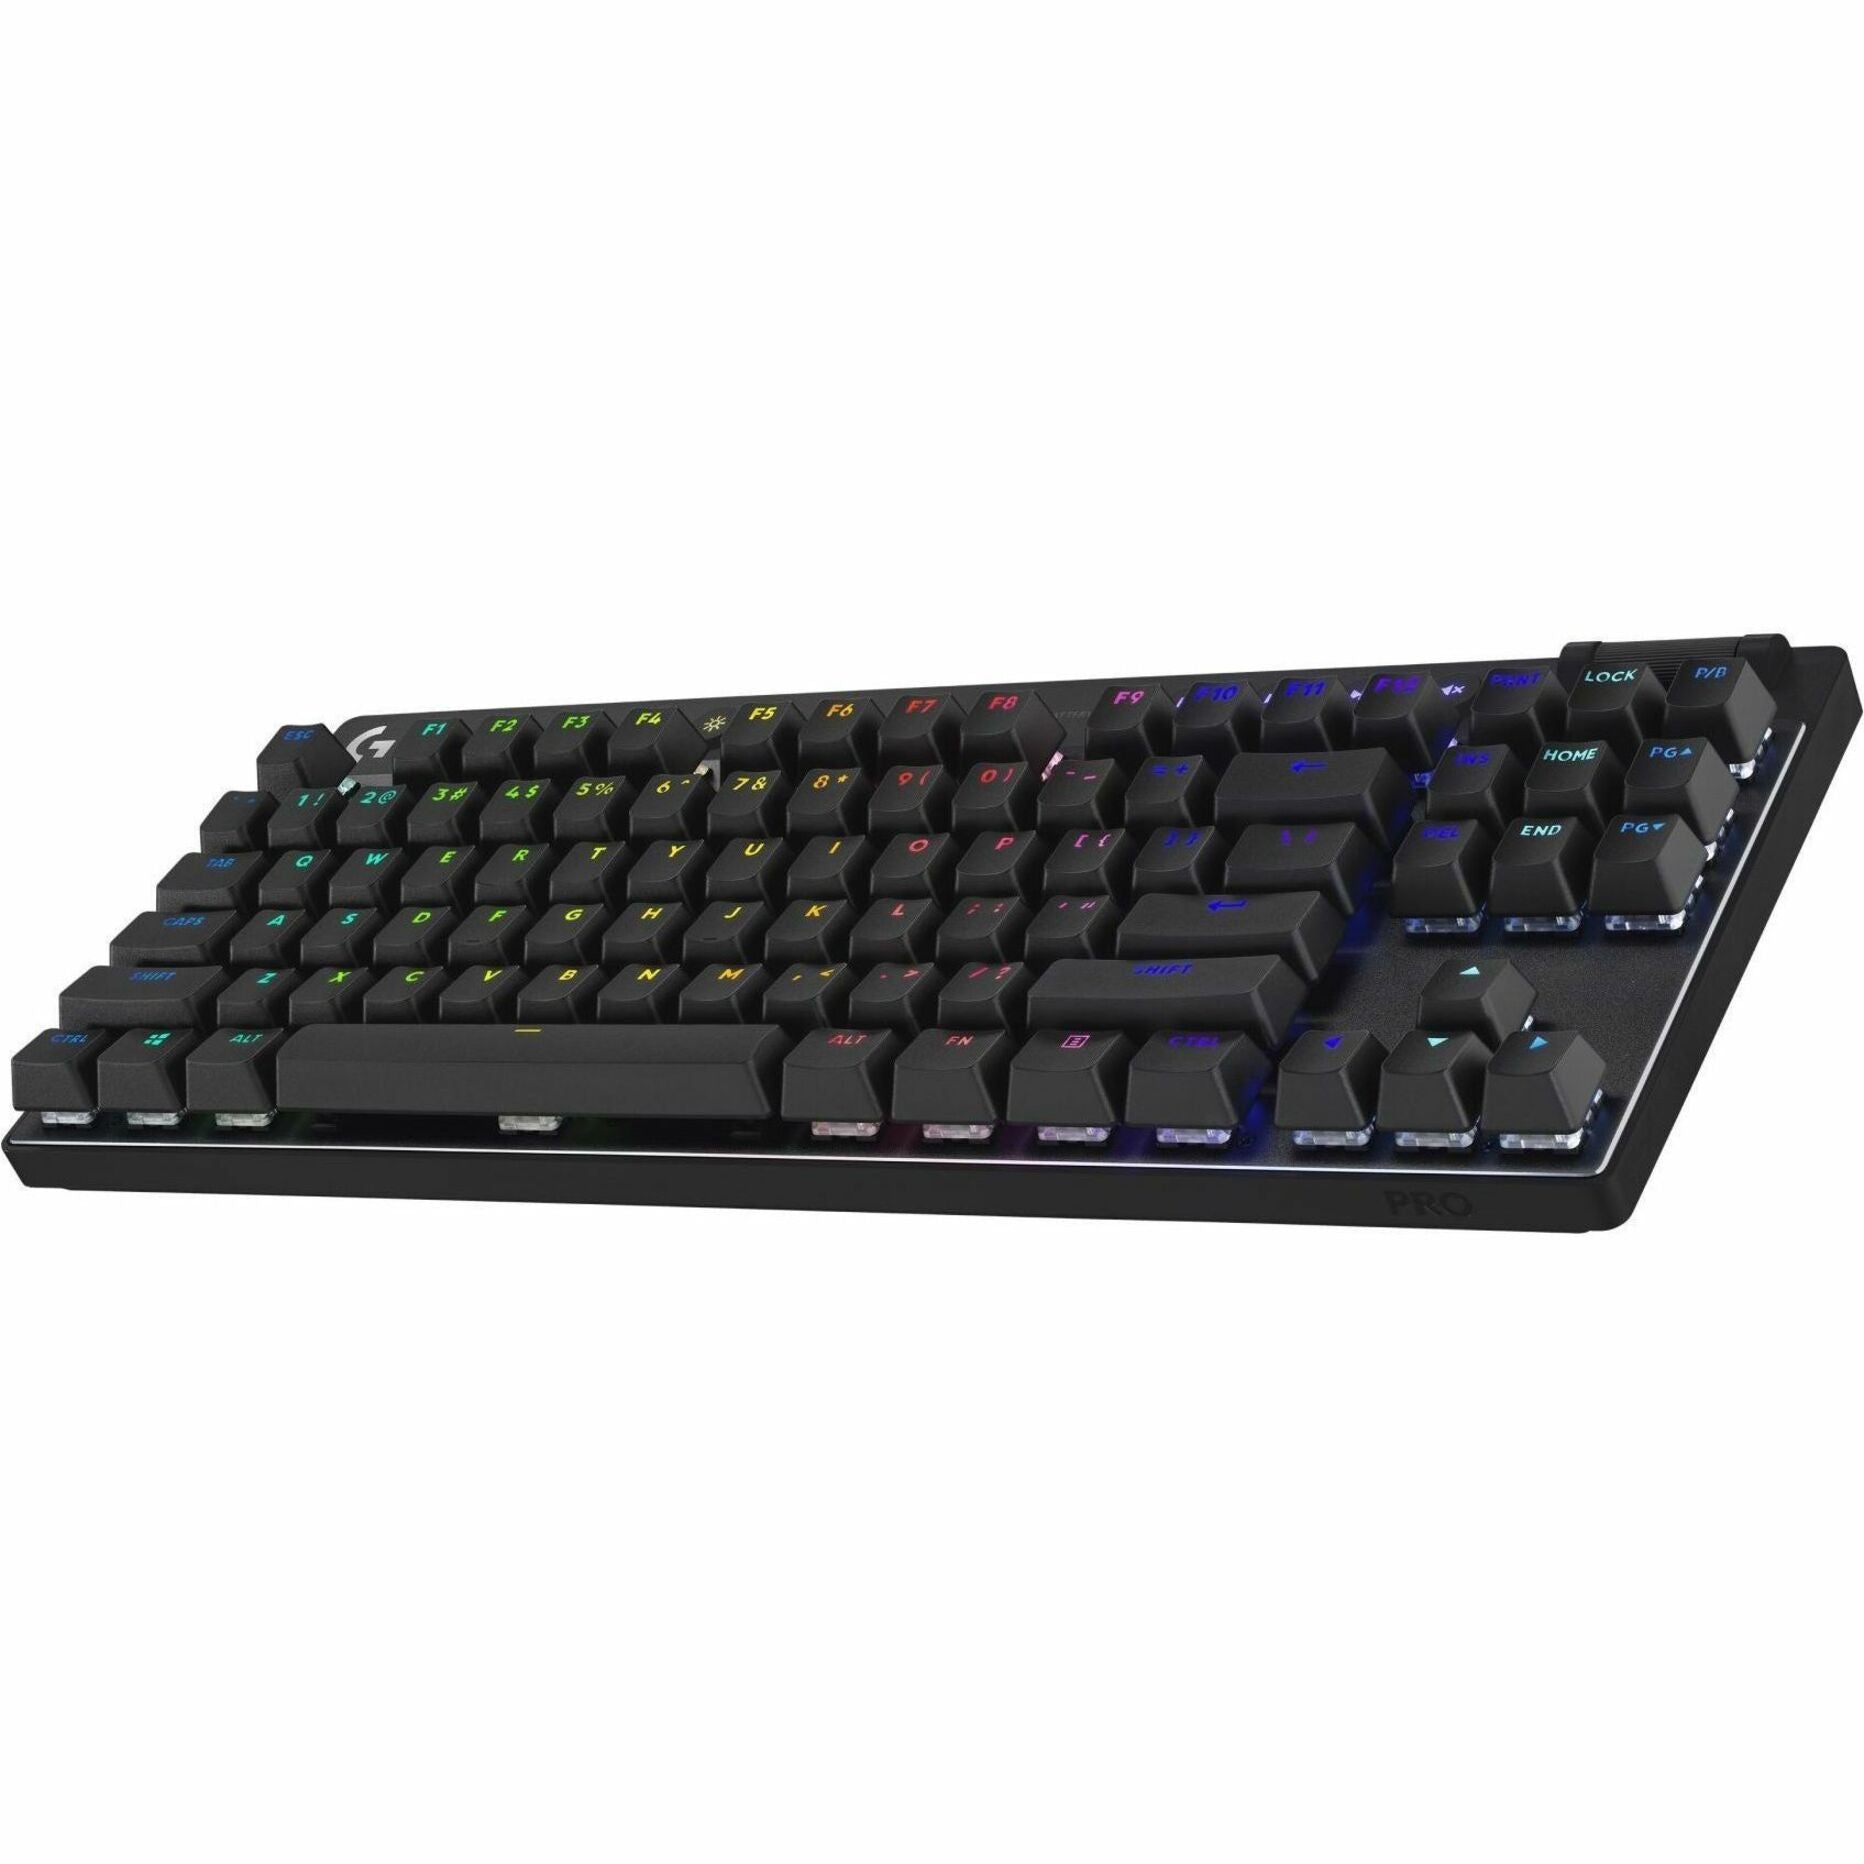 Logitech G 920-012127 PRO X TKL Lightspeed Gaming Keyboard, Wireless, RGB LED Backlight, Rechargeable